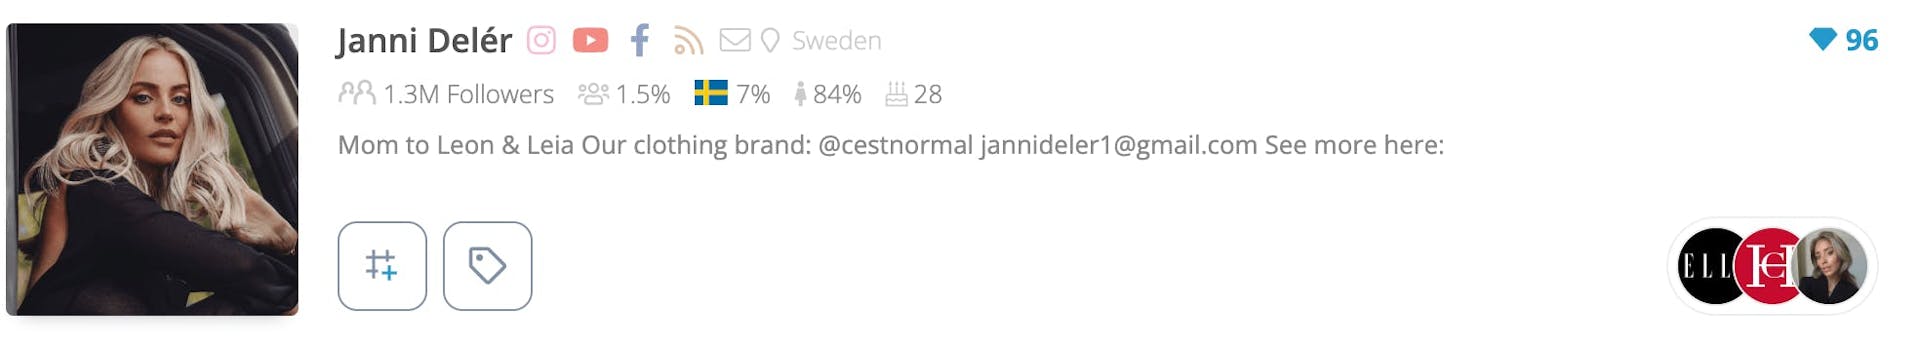 List of the top influencers in Sweden: Janni Deler